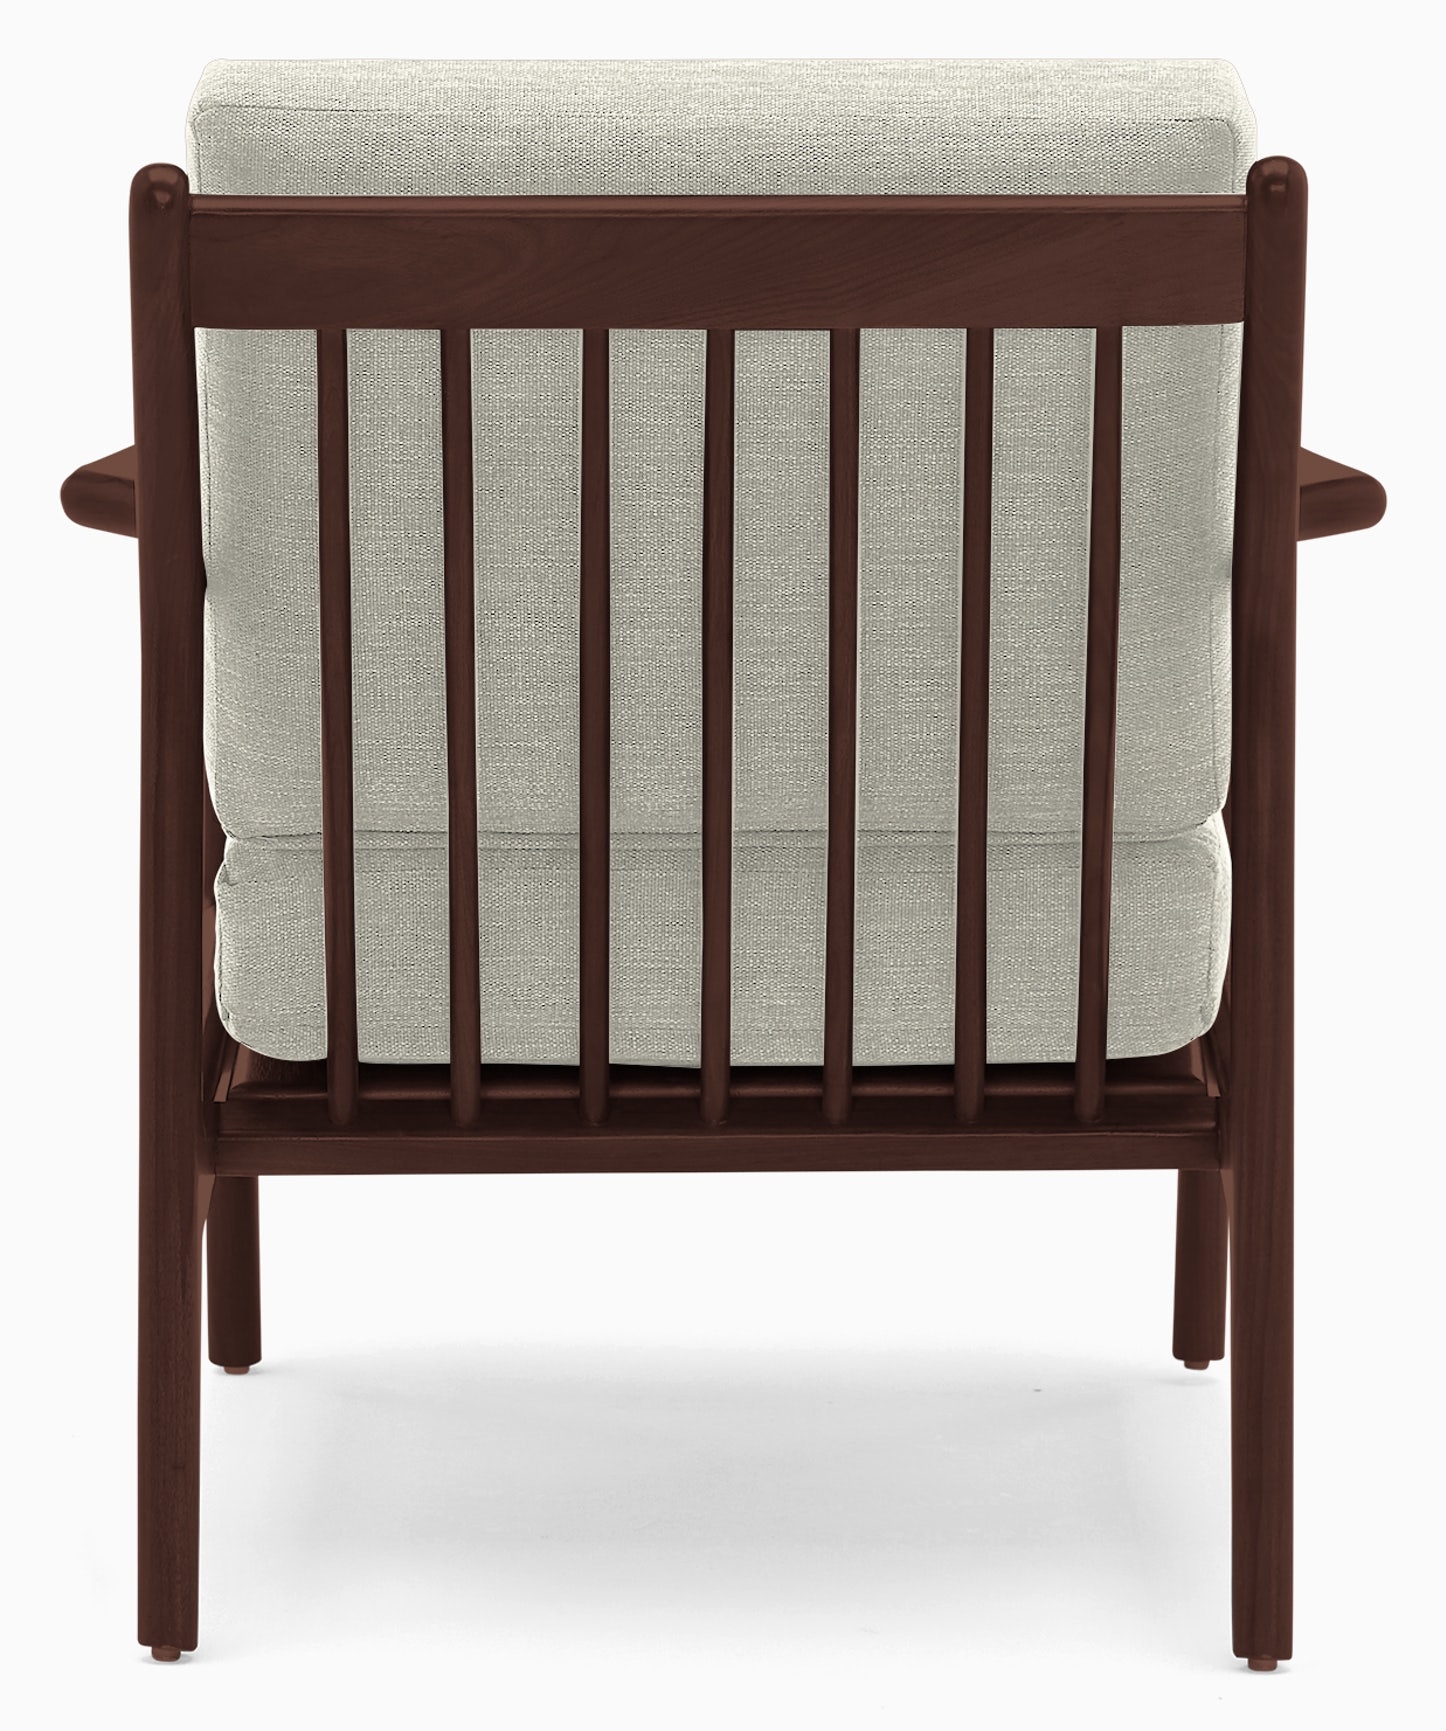 White Collins Mid Century Modern Chair - Nico Oyster - Walnut - Image 4